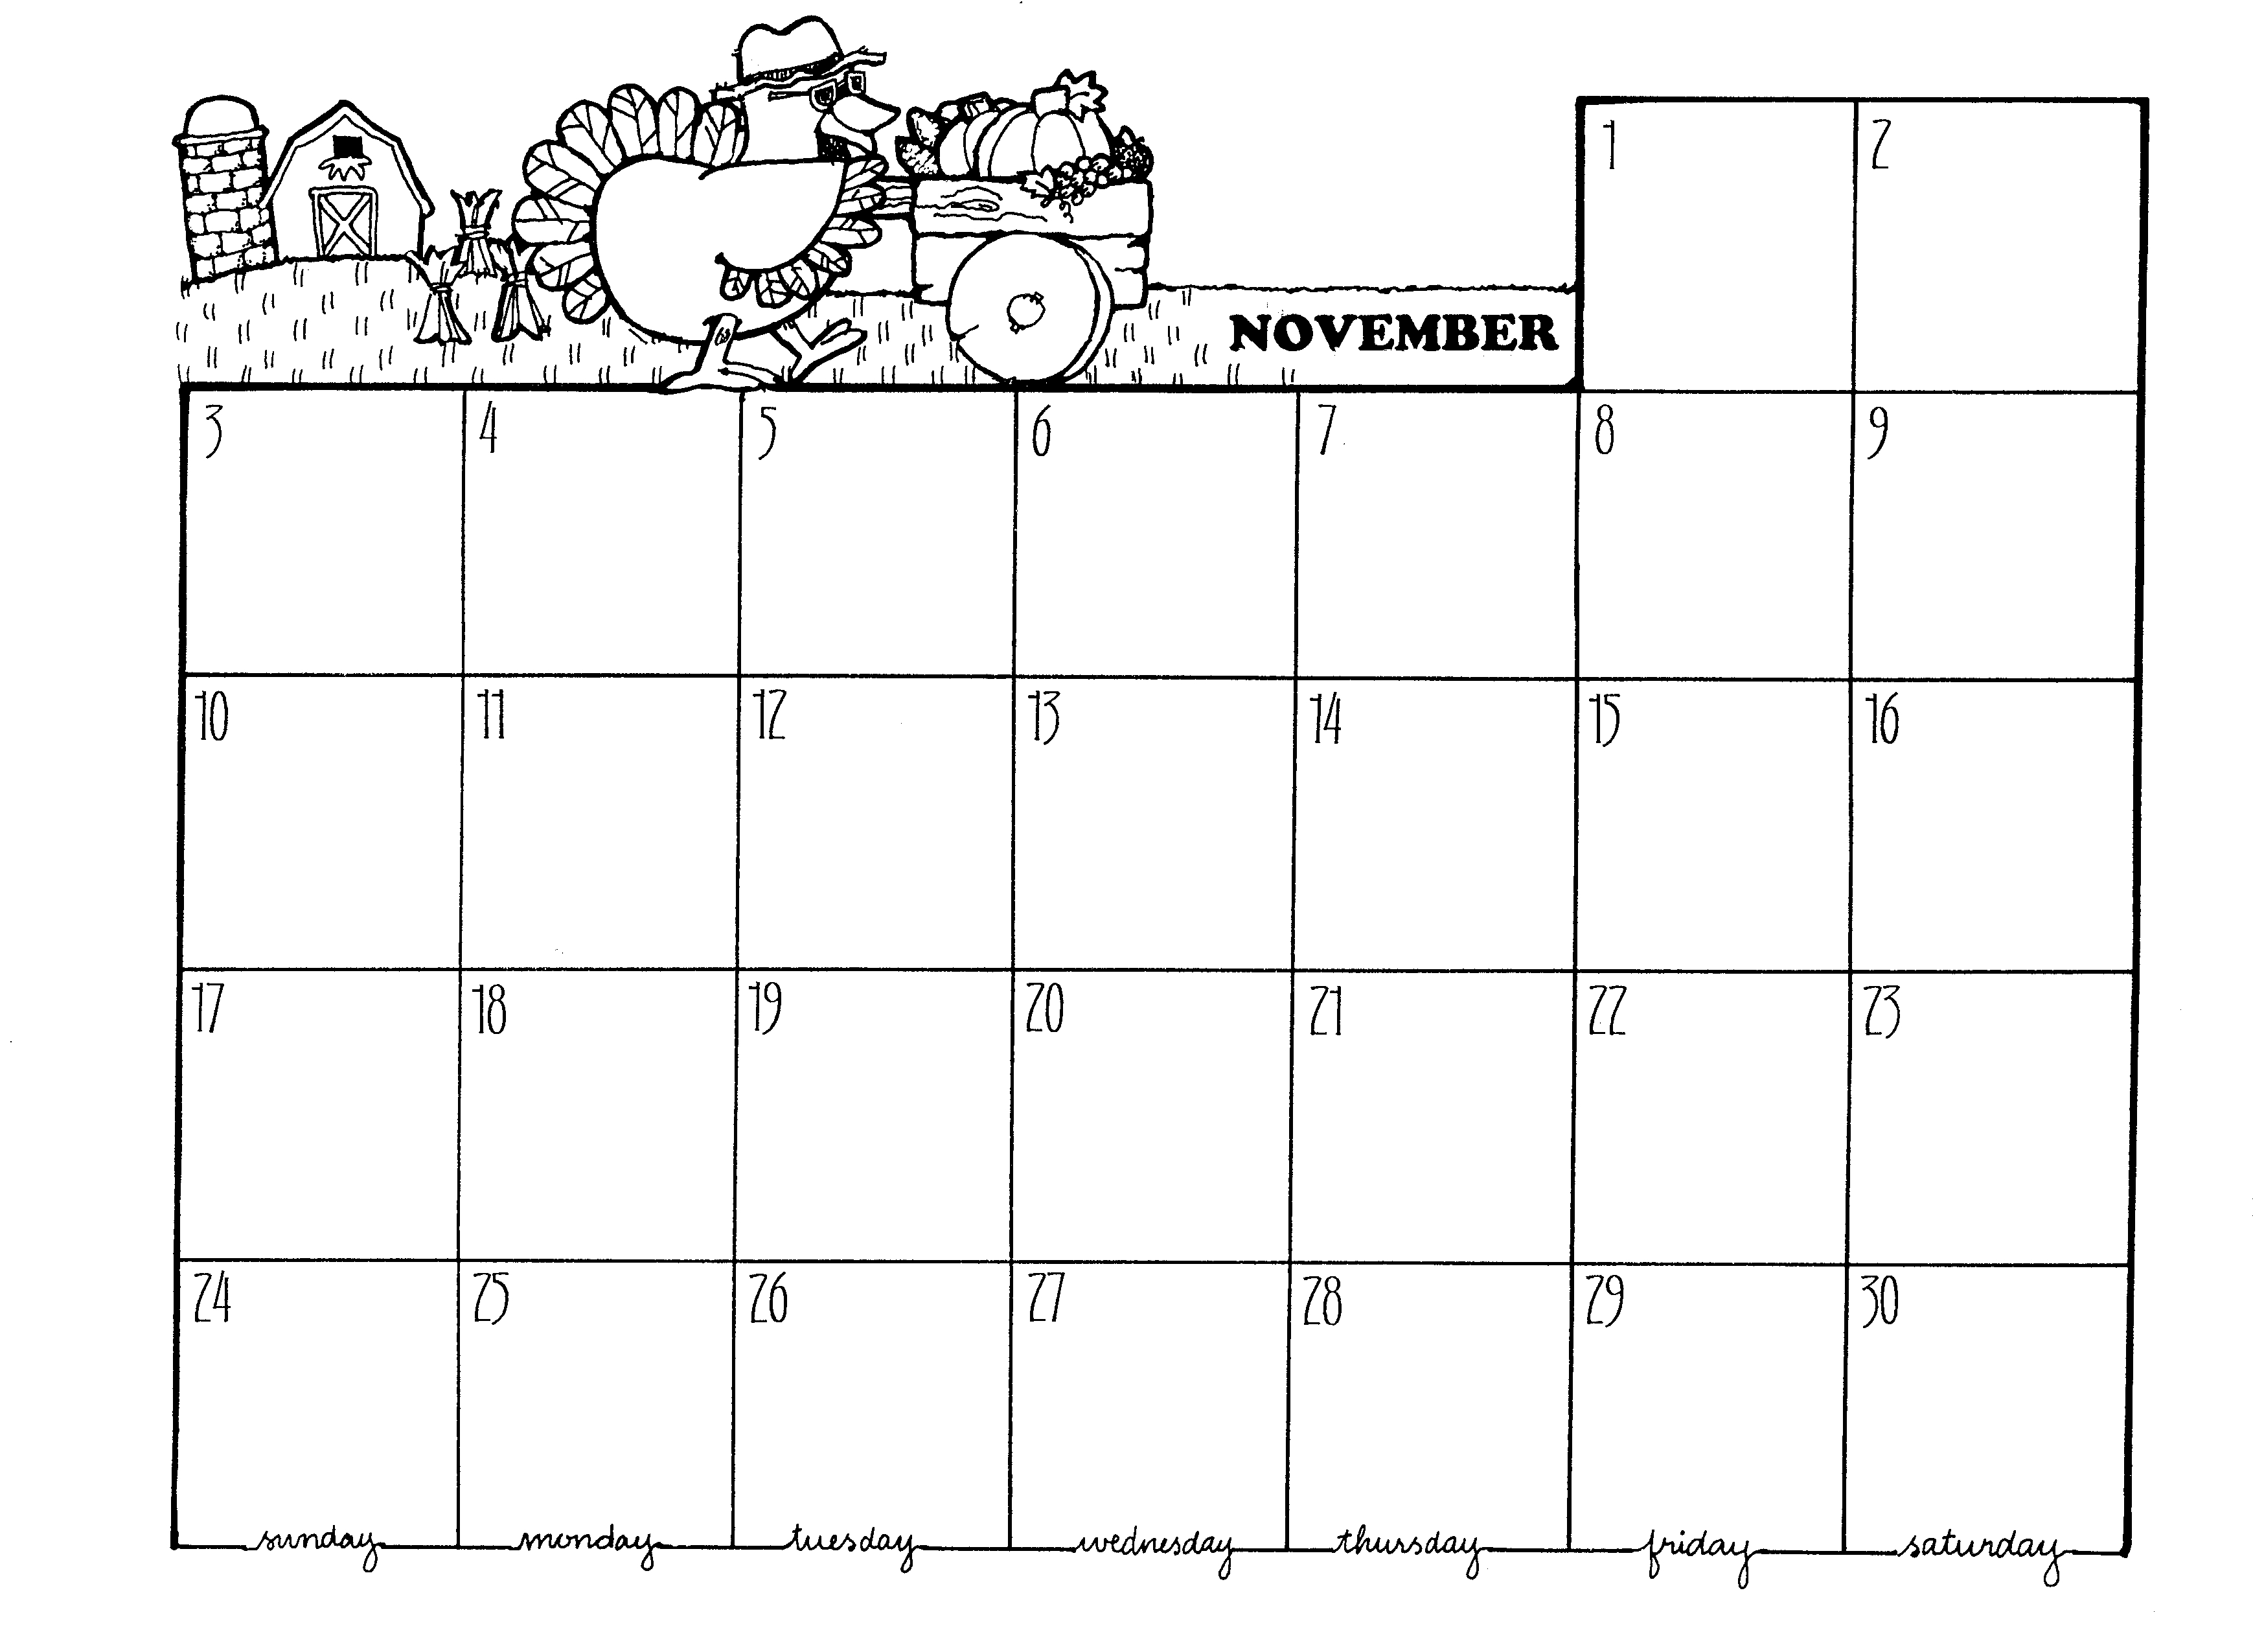 Cg 96 November Calendar Page File Type  Image Jpeg File Size  811 91    